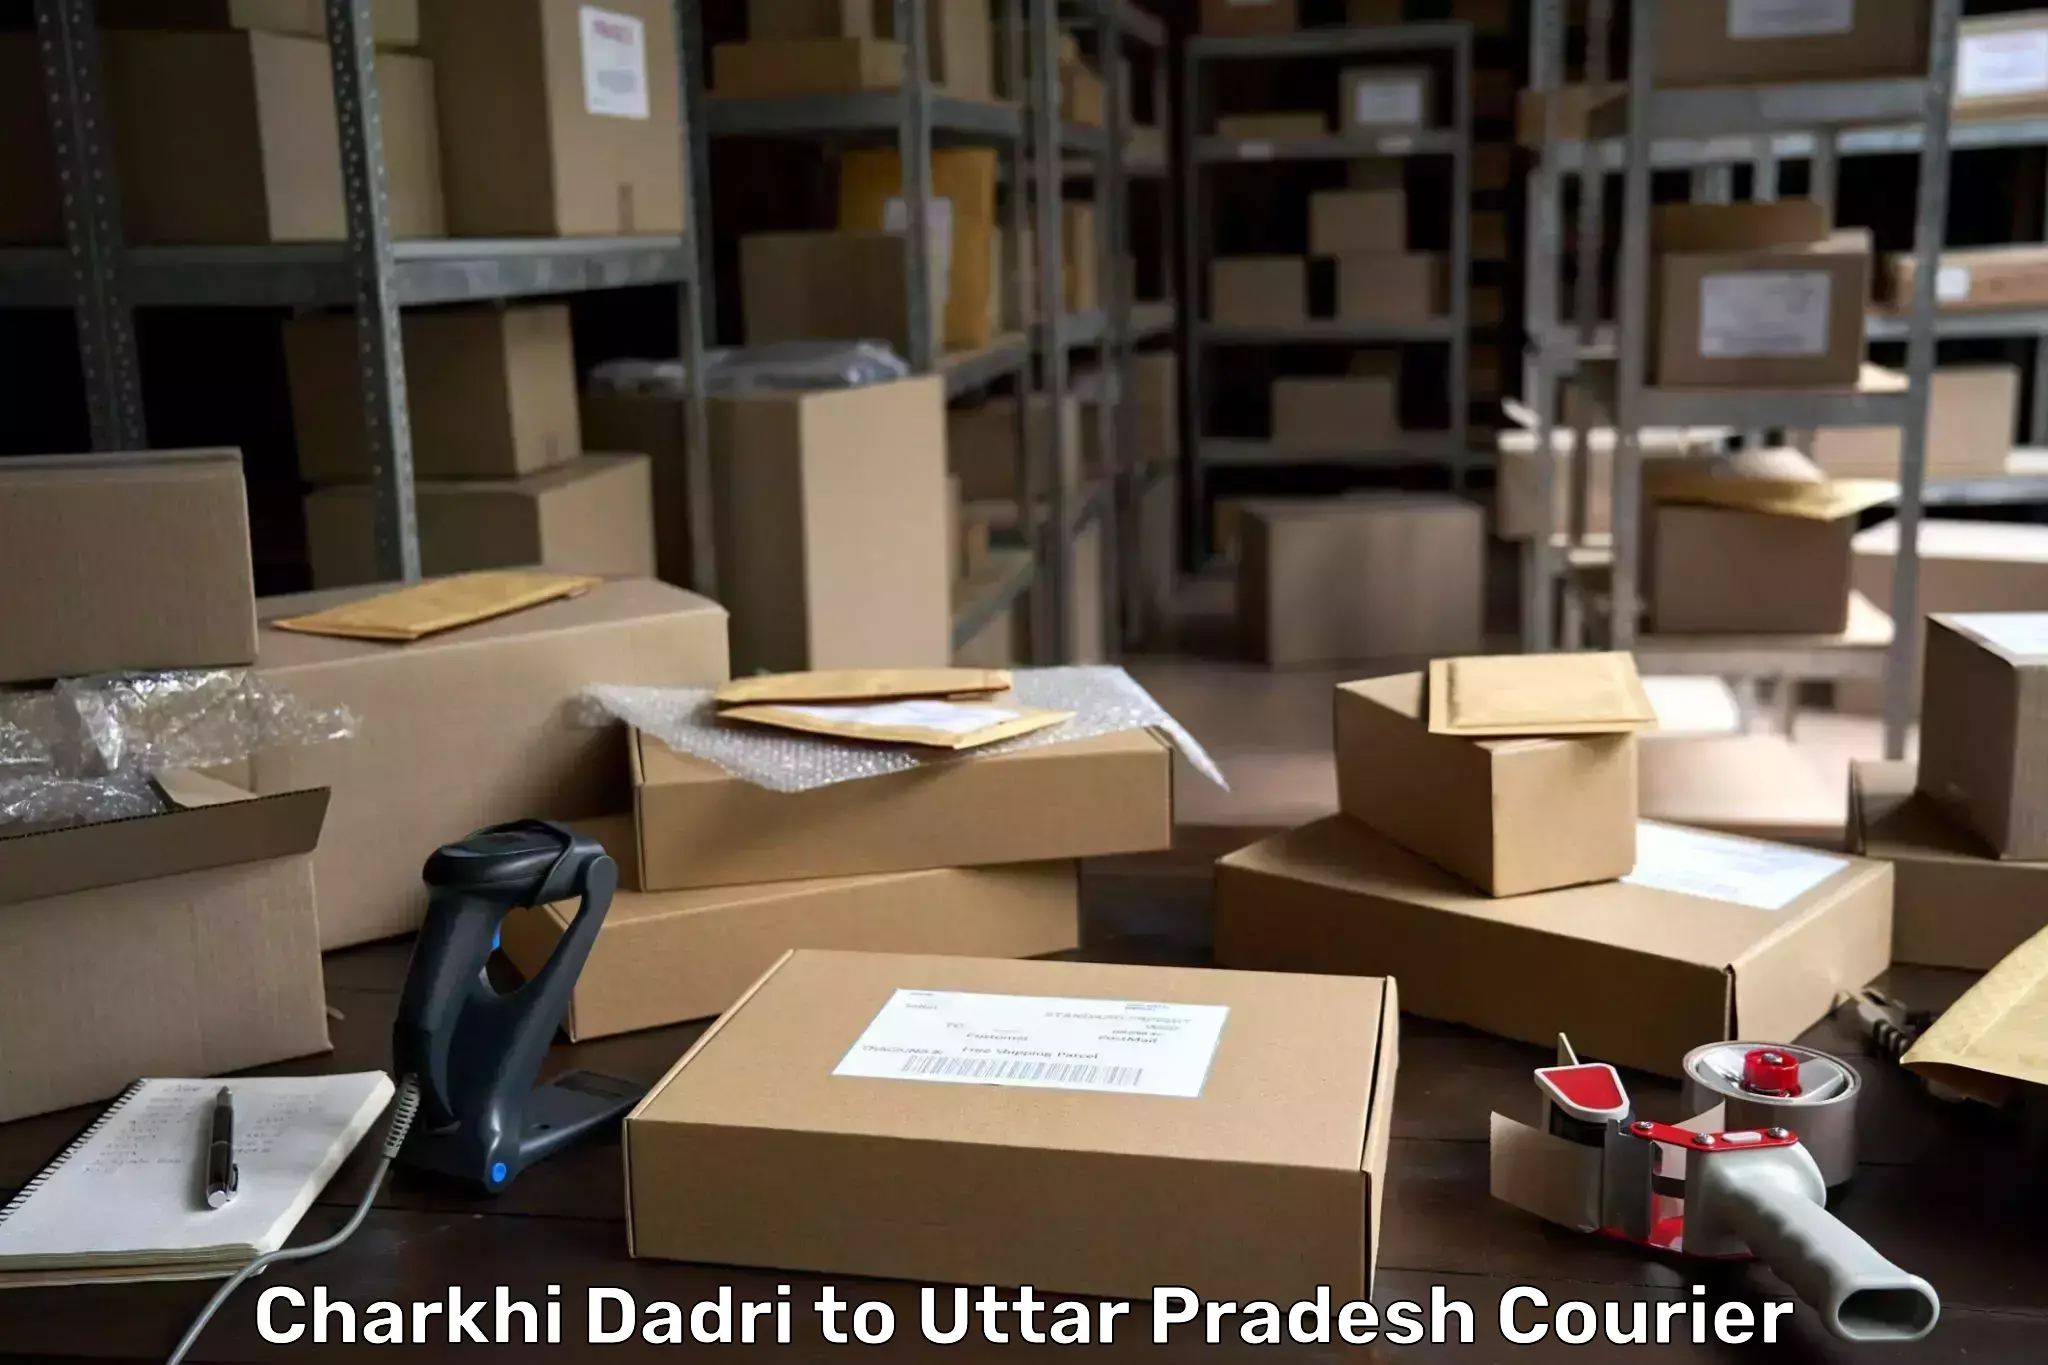 Global courier networks Charkhi Dadri to Varanasi